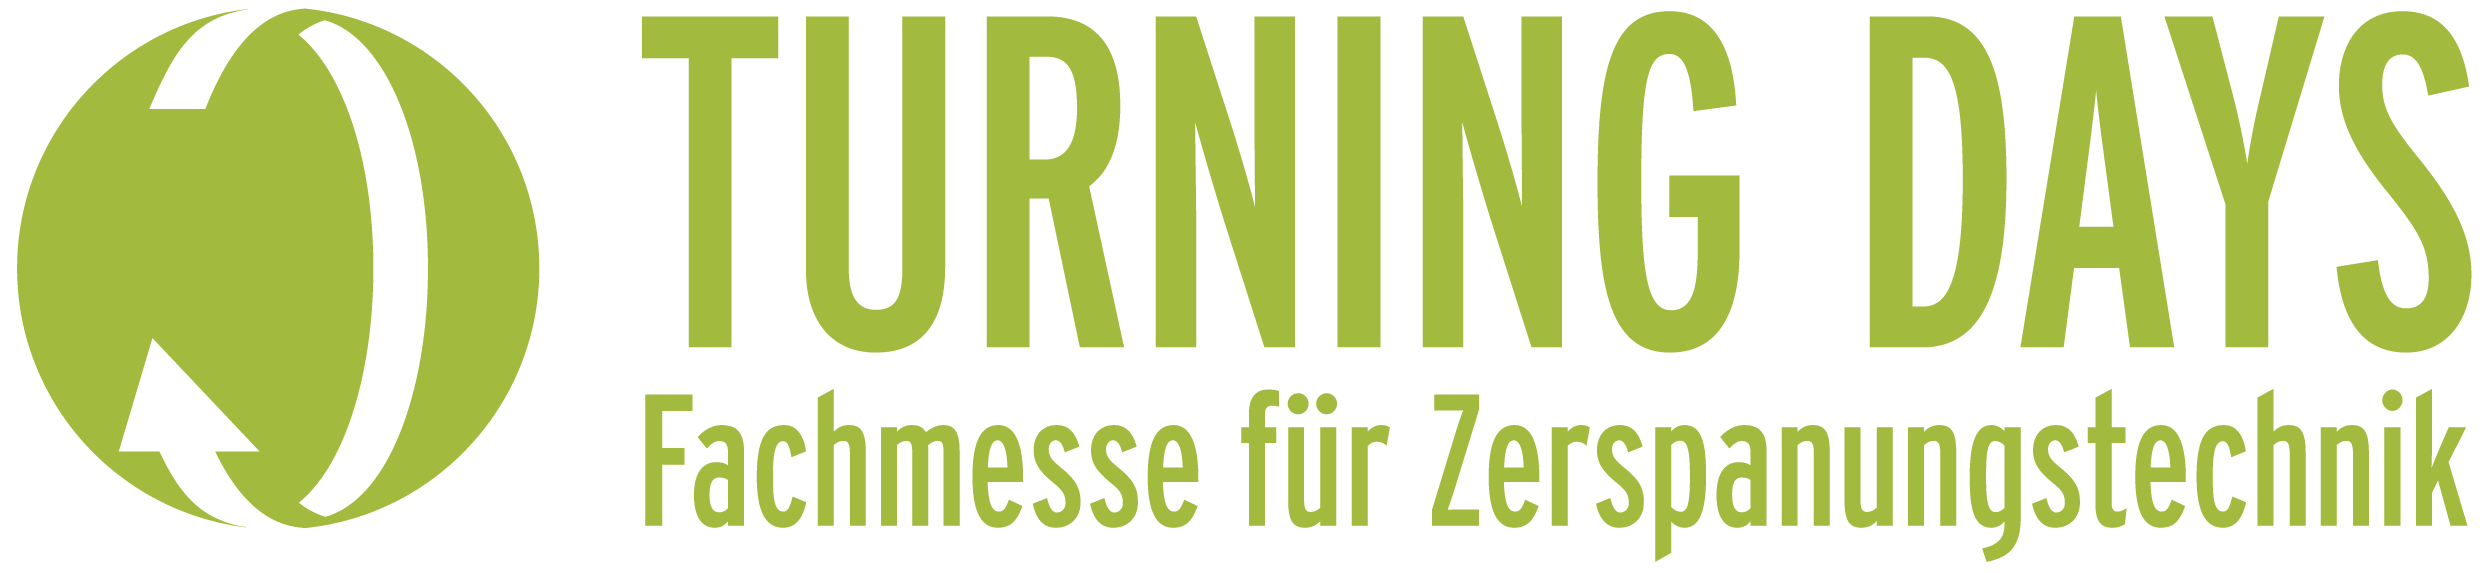 TD-Fachmesse Logo-03